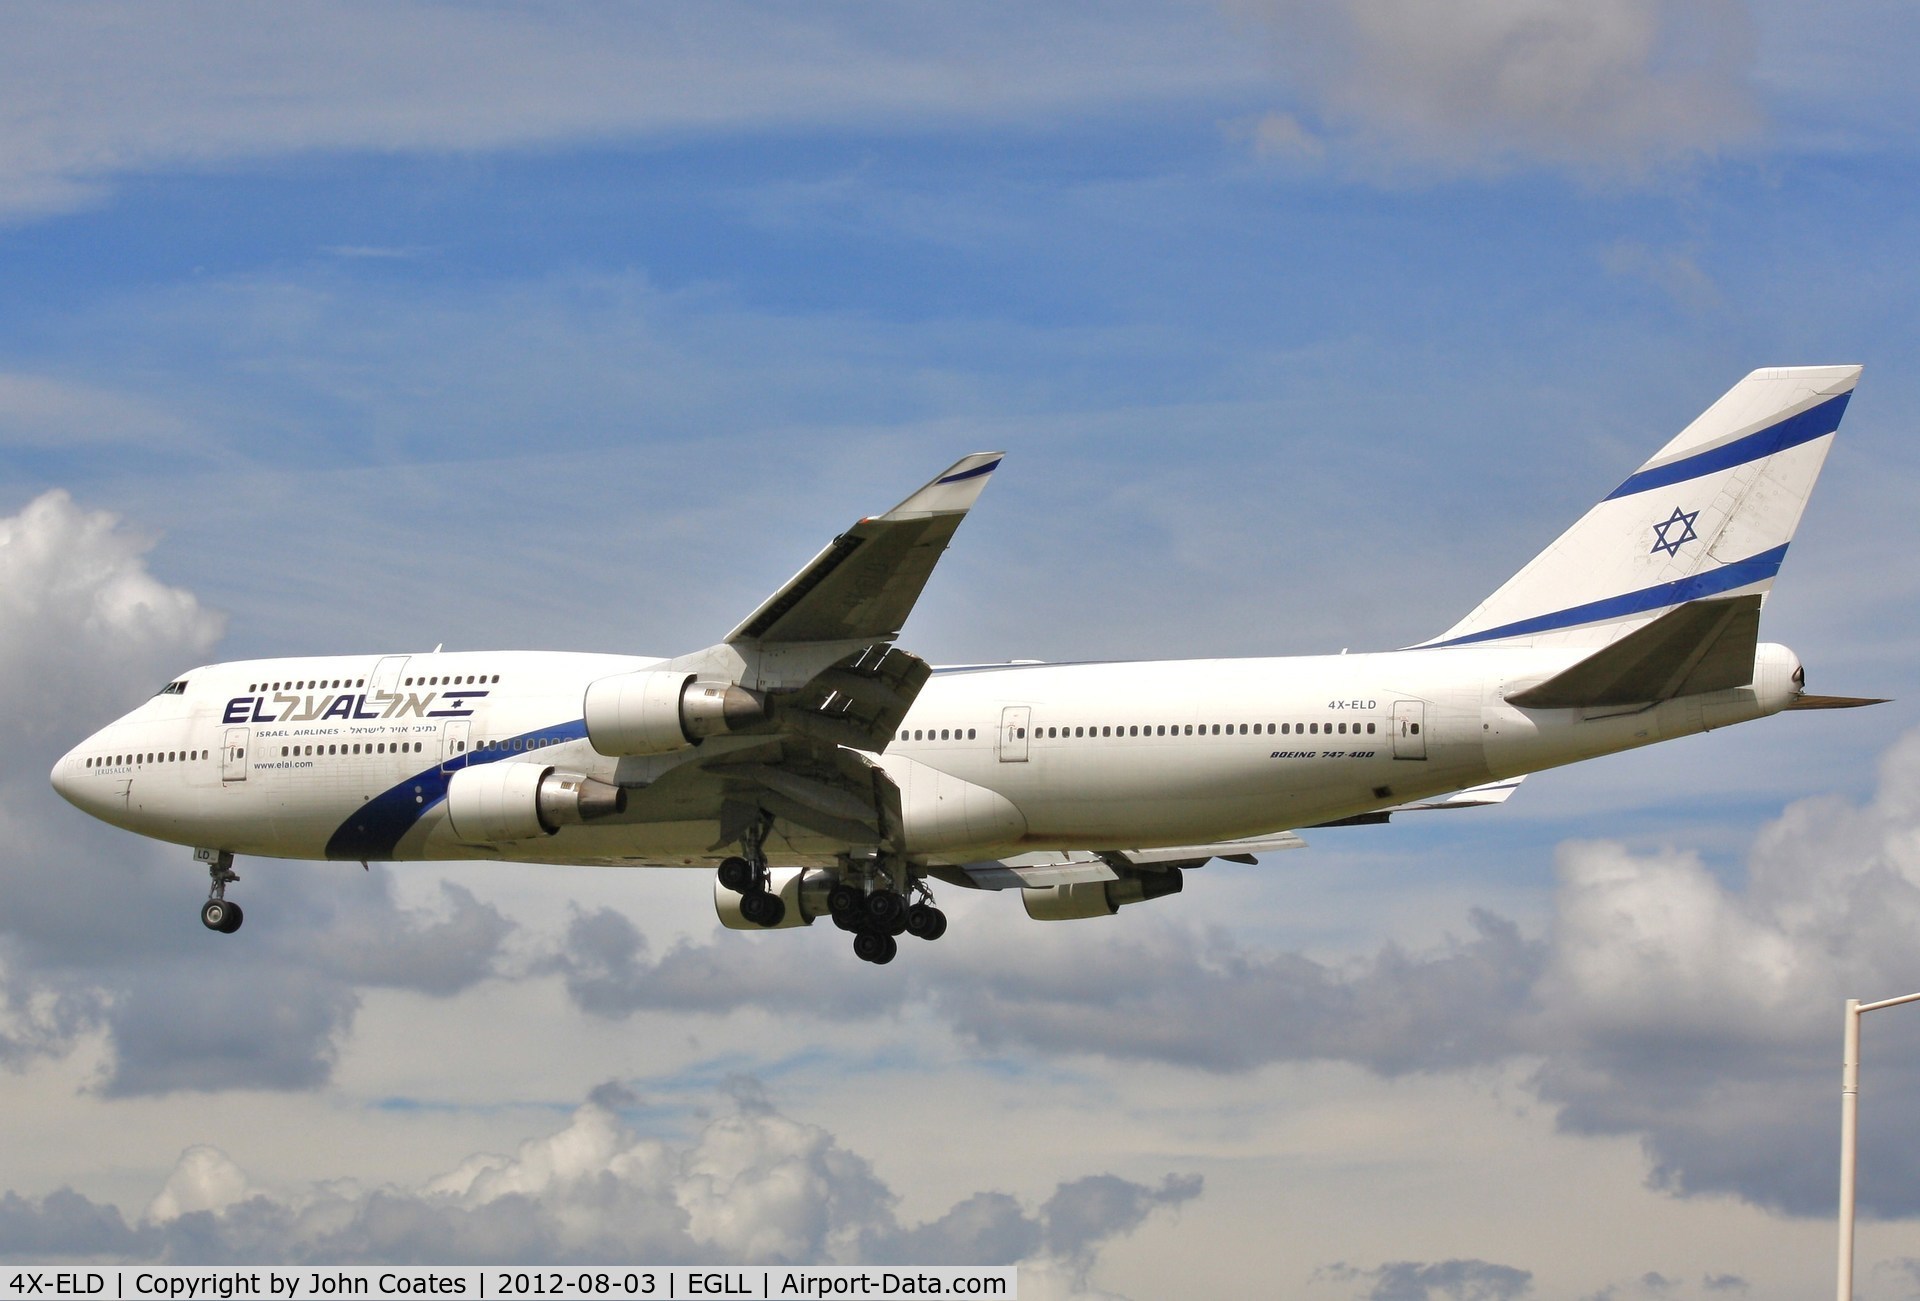 4X-ELD, 1999 Boeing 747-458 C/N 29328, Finals 27R